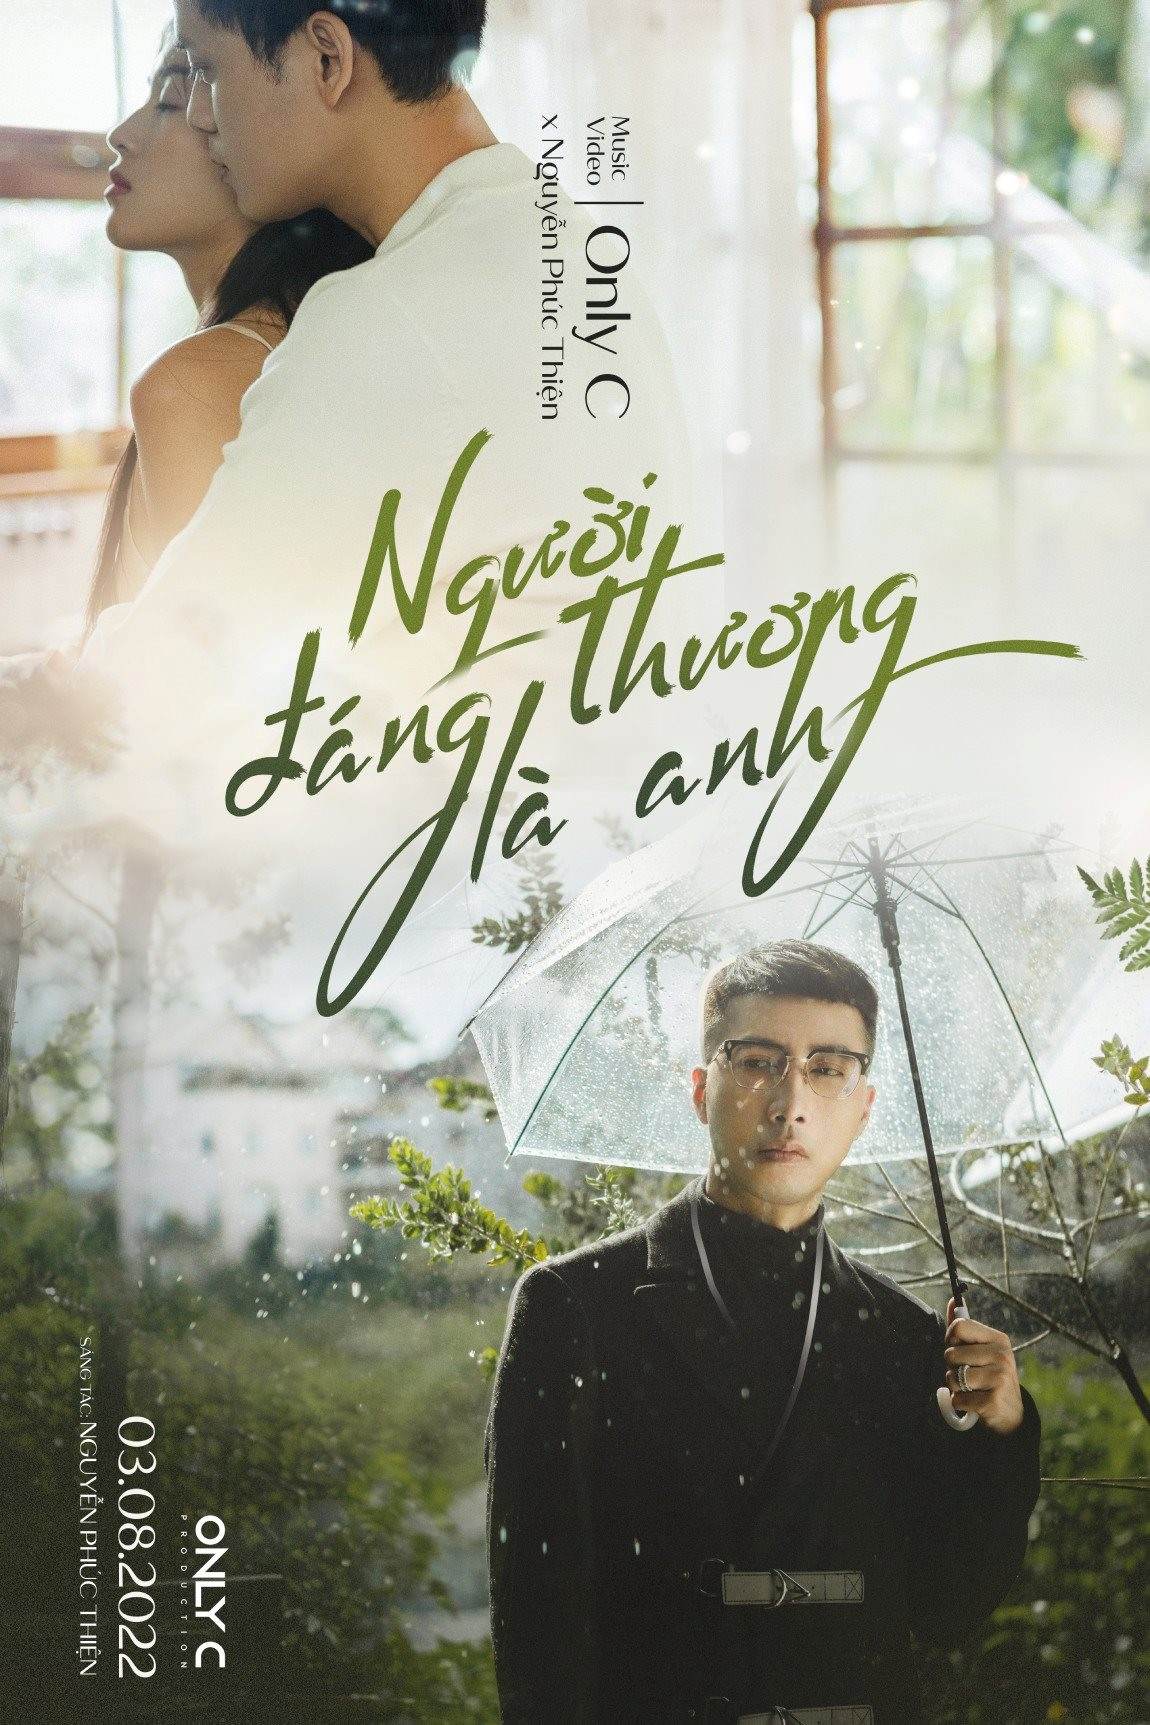 poster-mv-nguoi-dang-thuong-la-anh.jpg